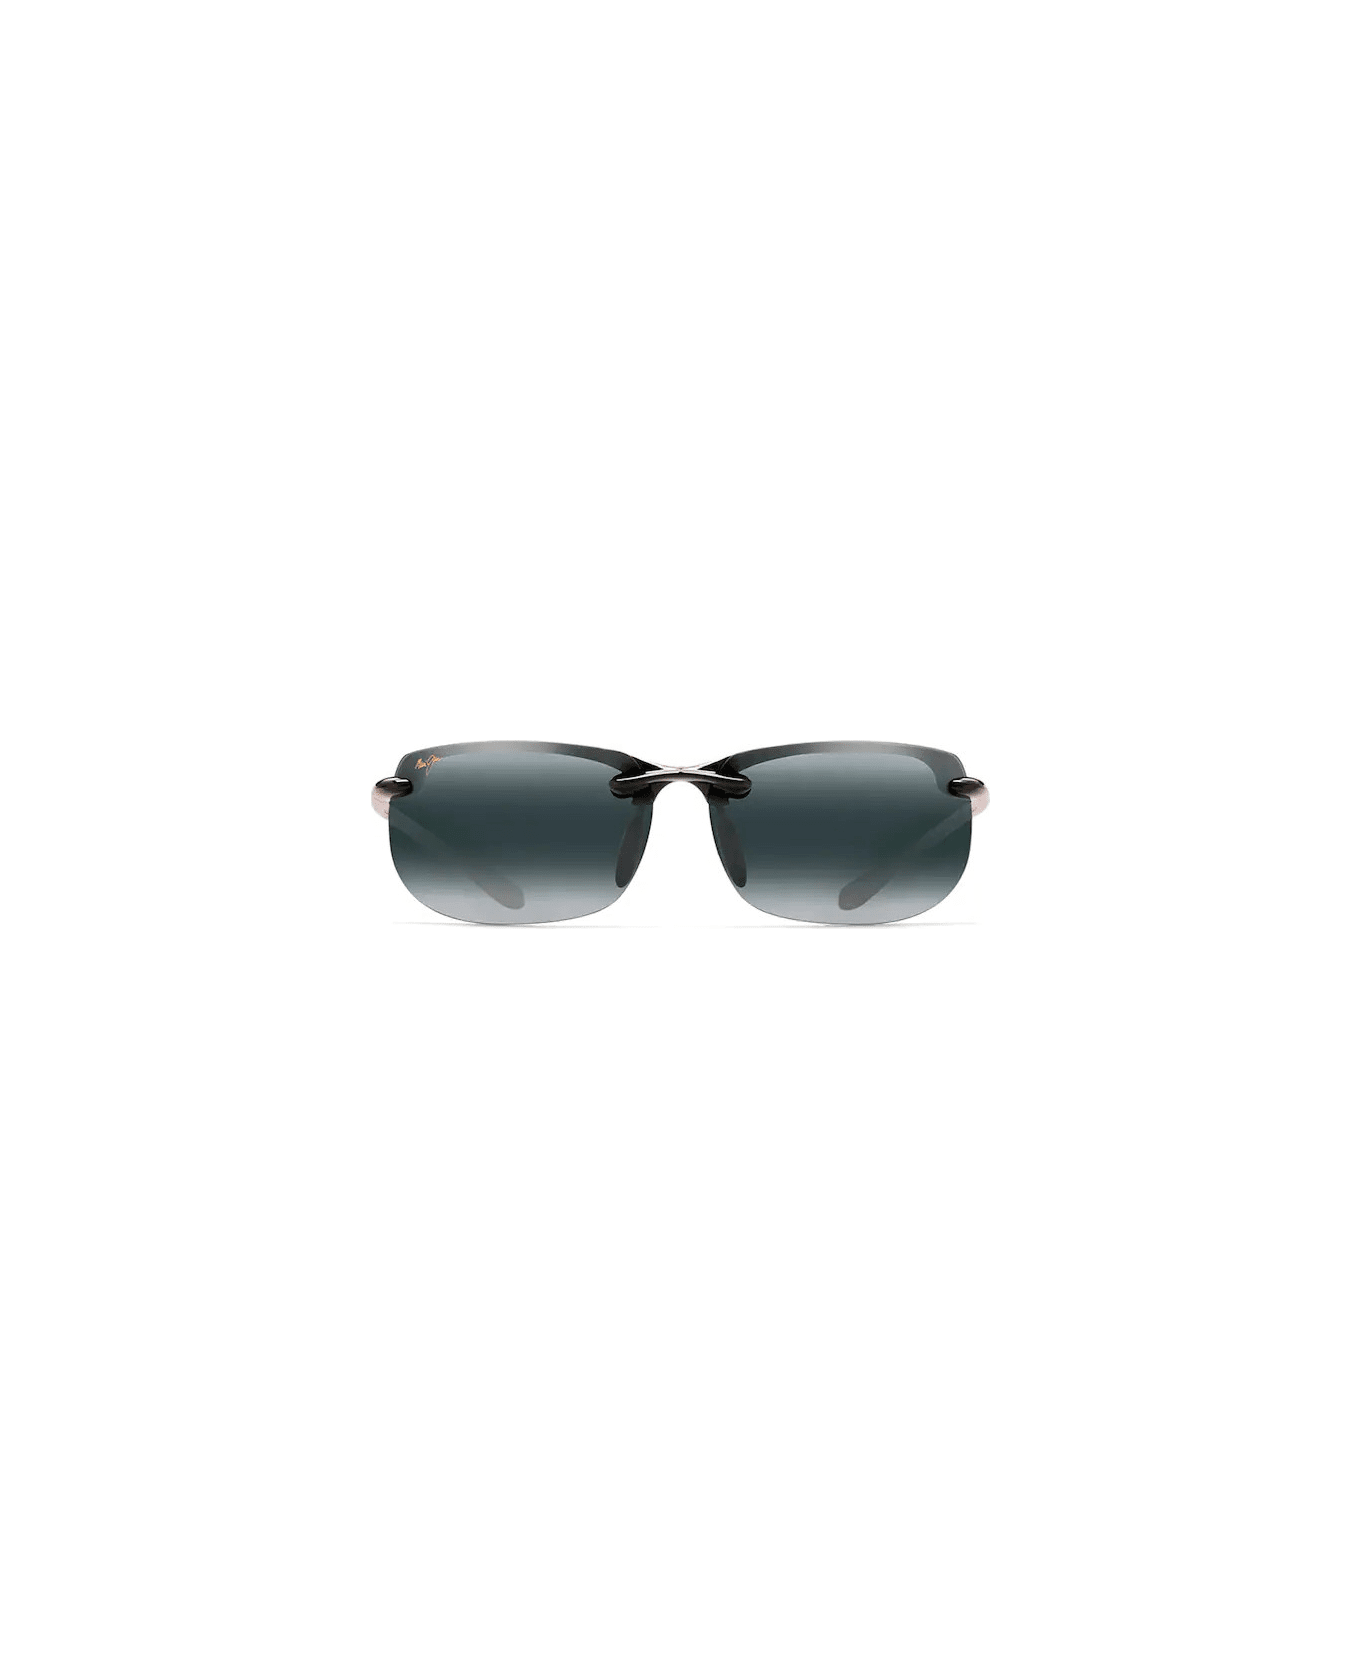 Maui Jim MJ412-02 Sunglasses - Nero lenti grigie